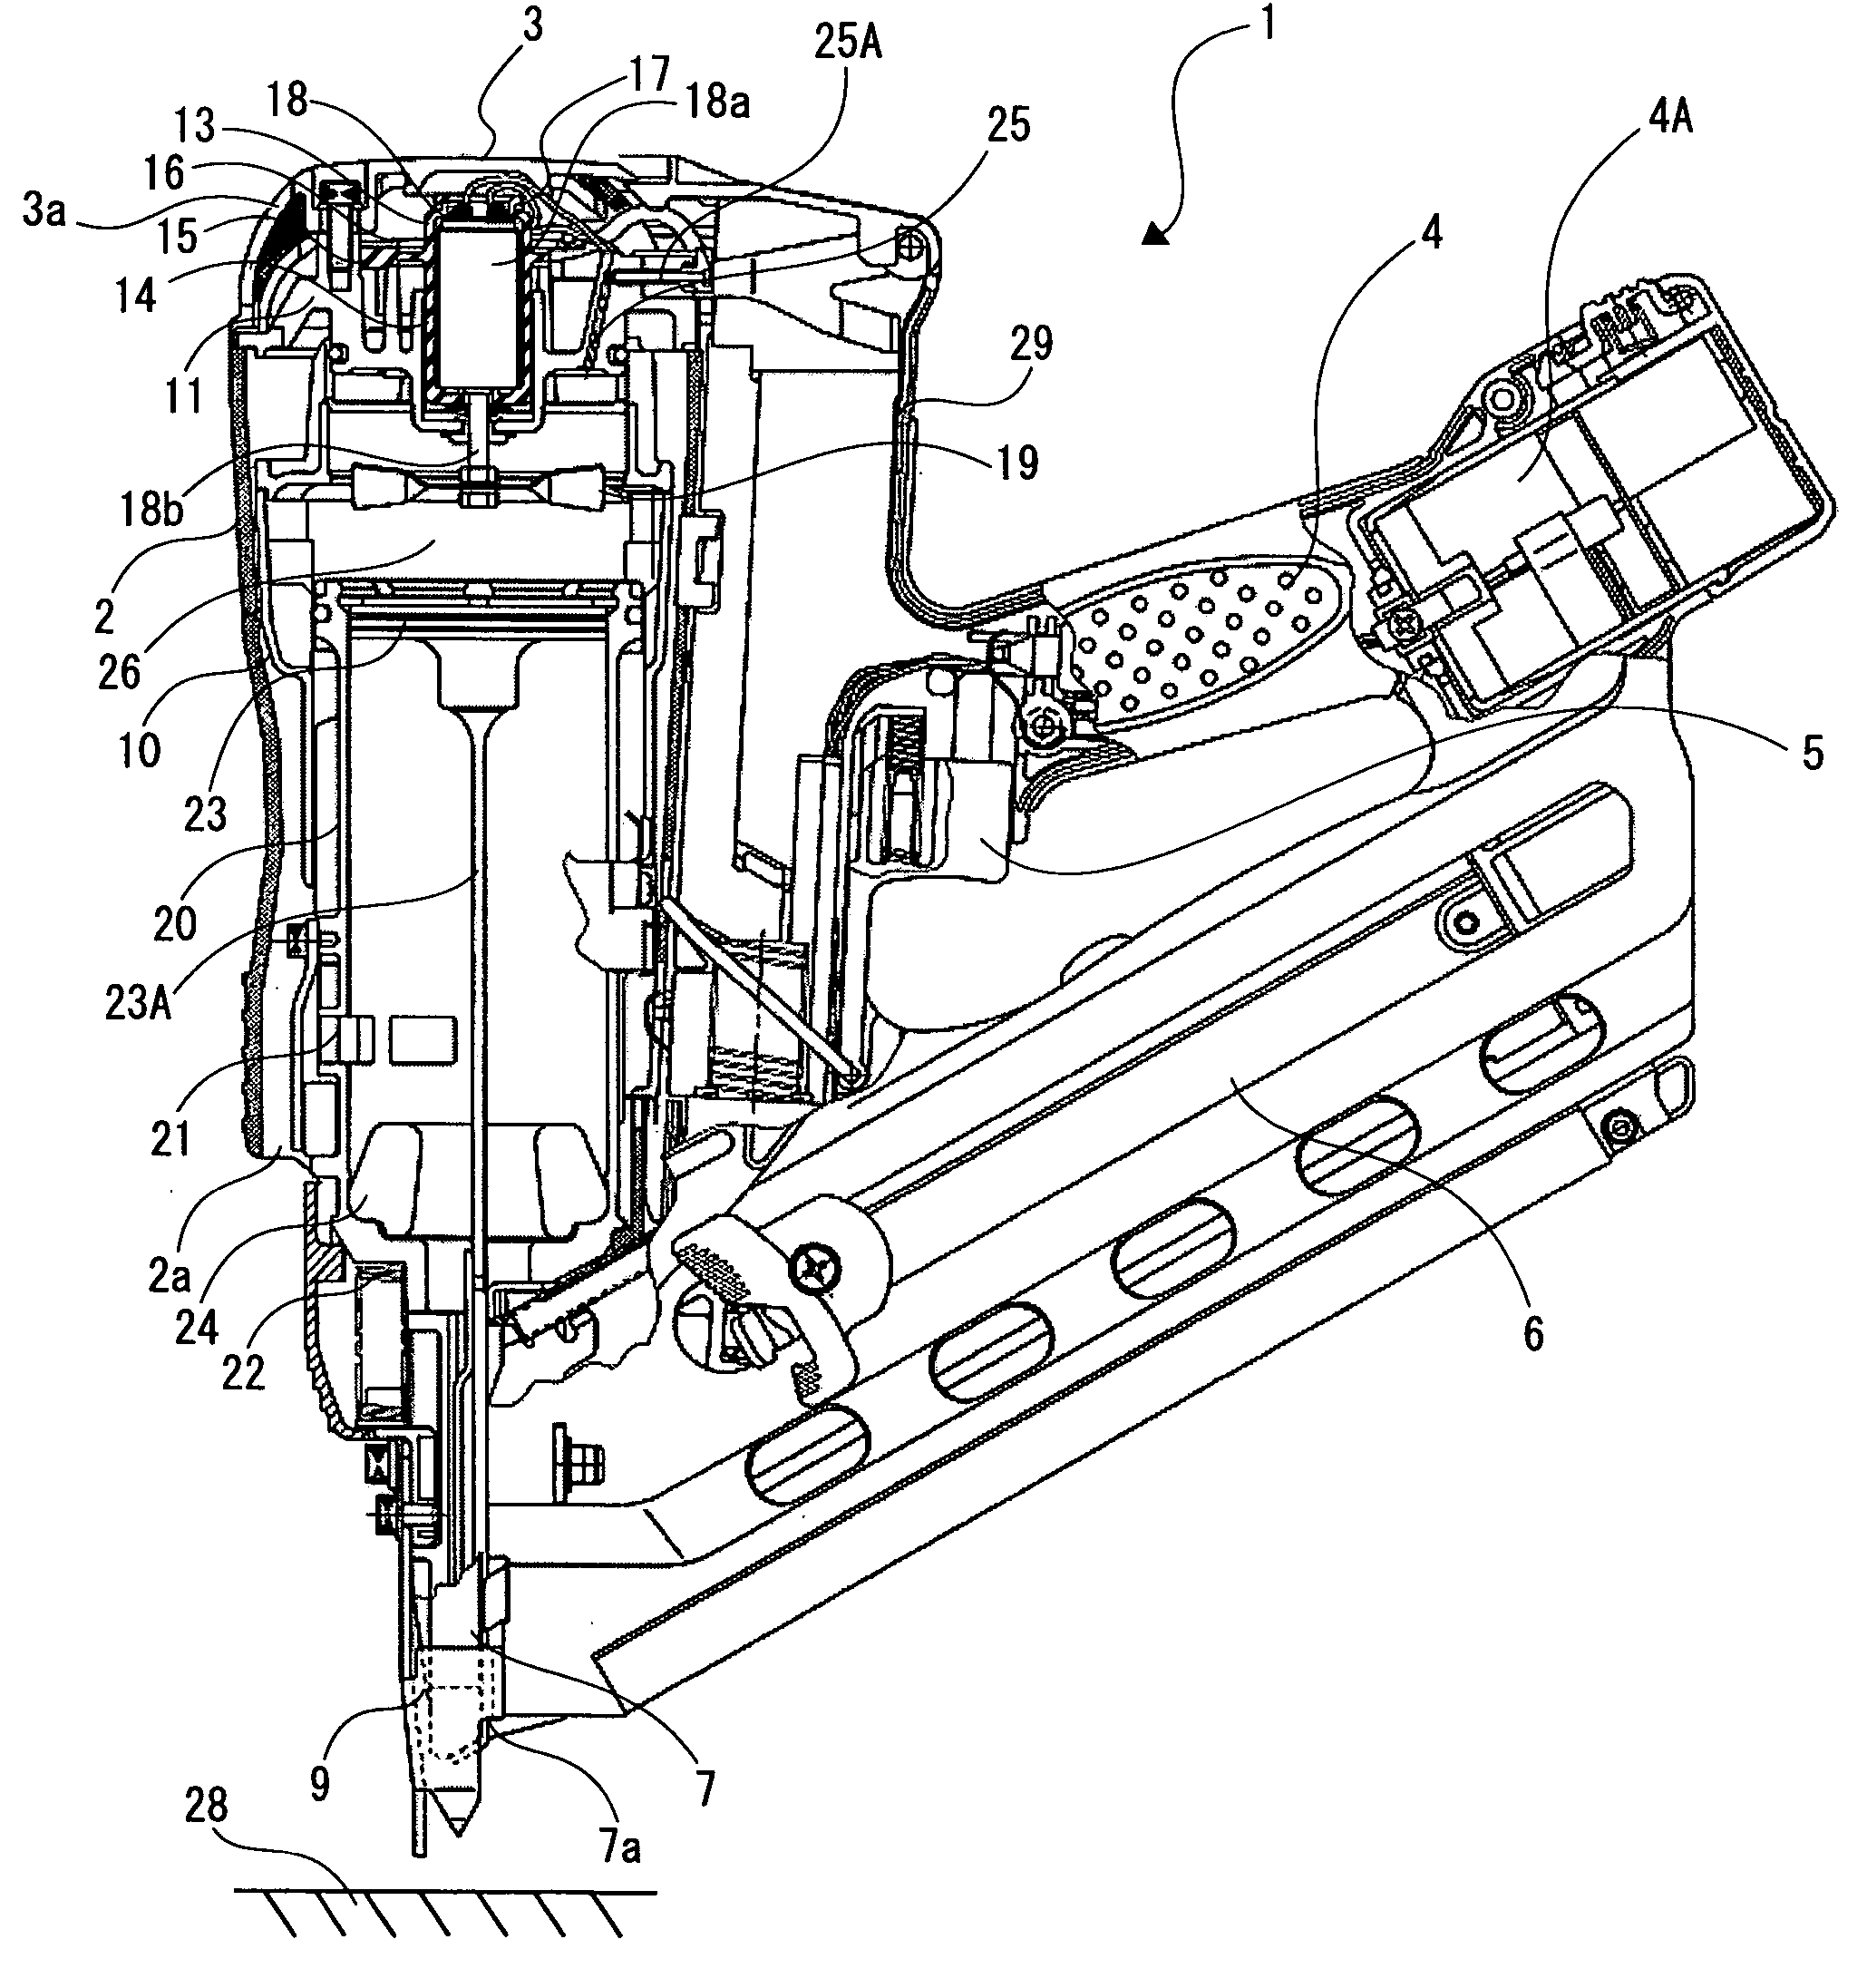 Combustion type power tool having motor suspension arrangement